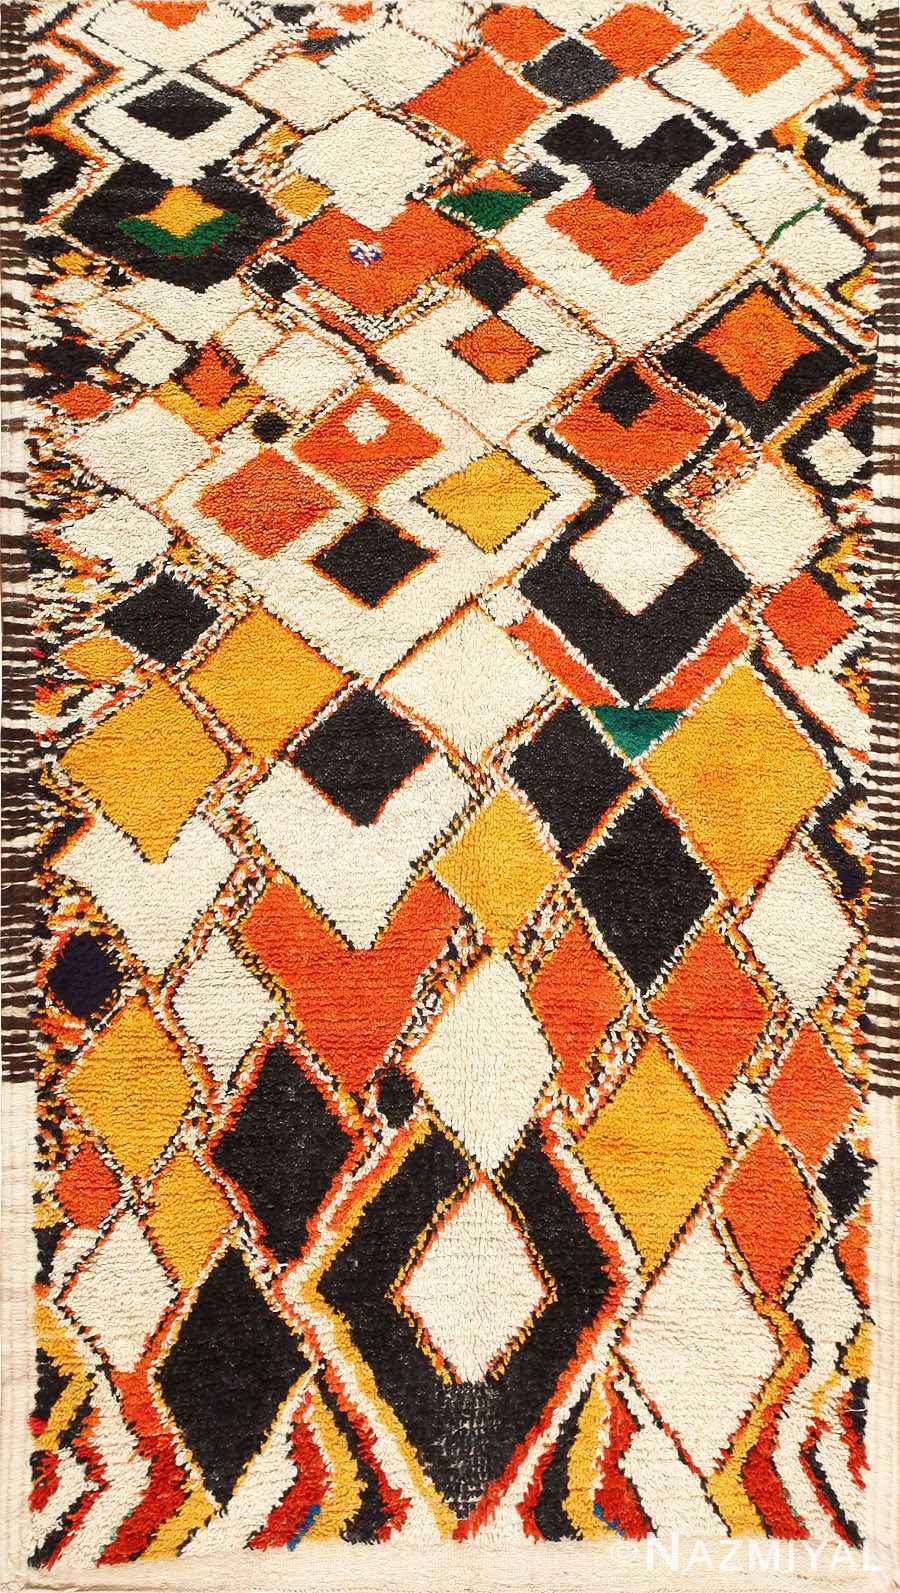 Primitive Vintage Moroccan Rug 47936 by Nazmiyal